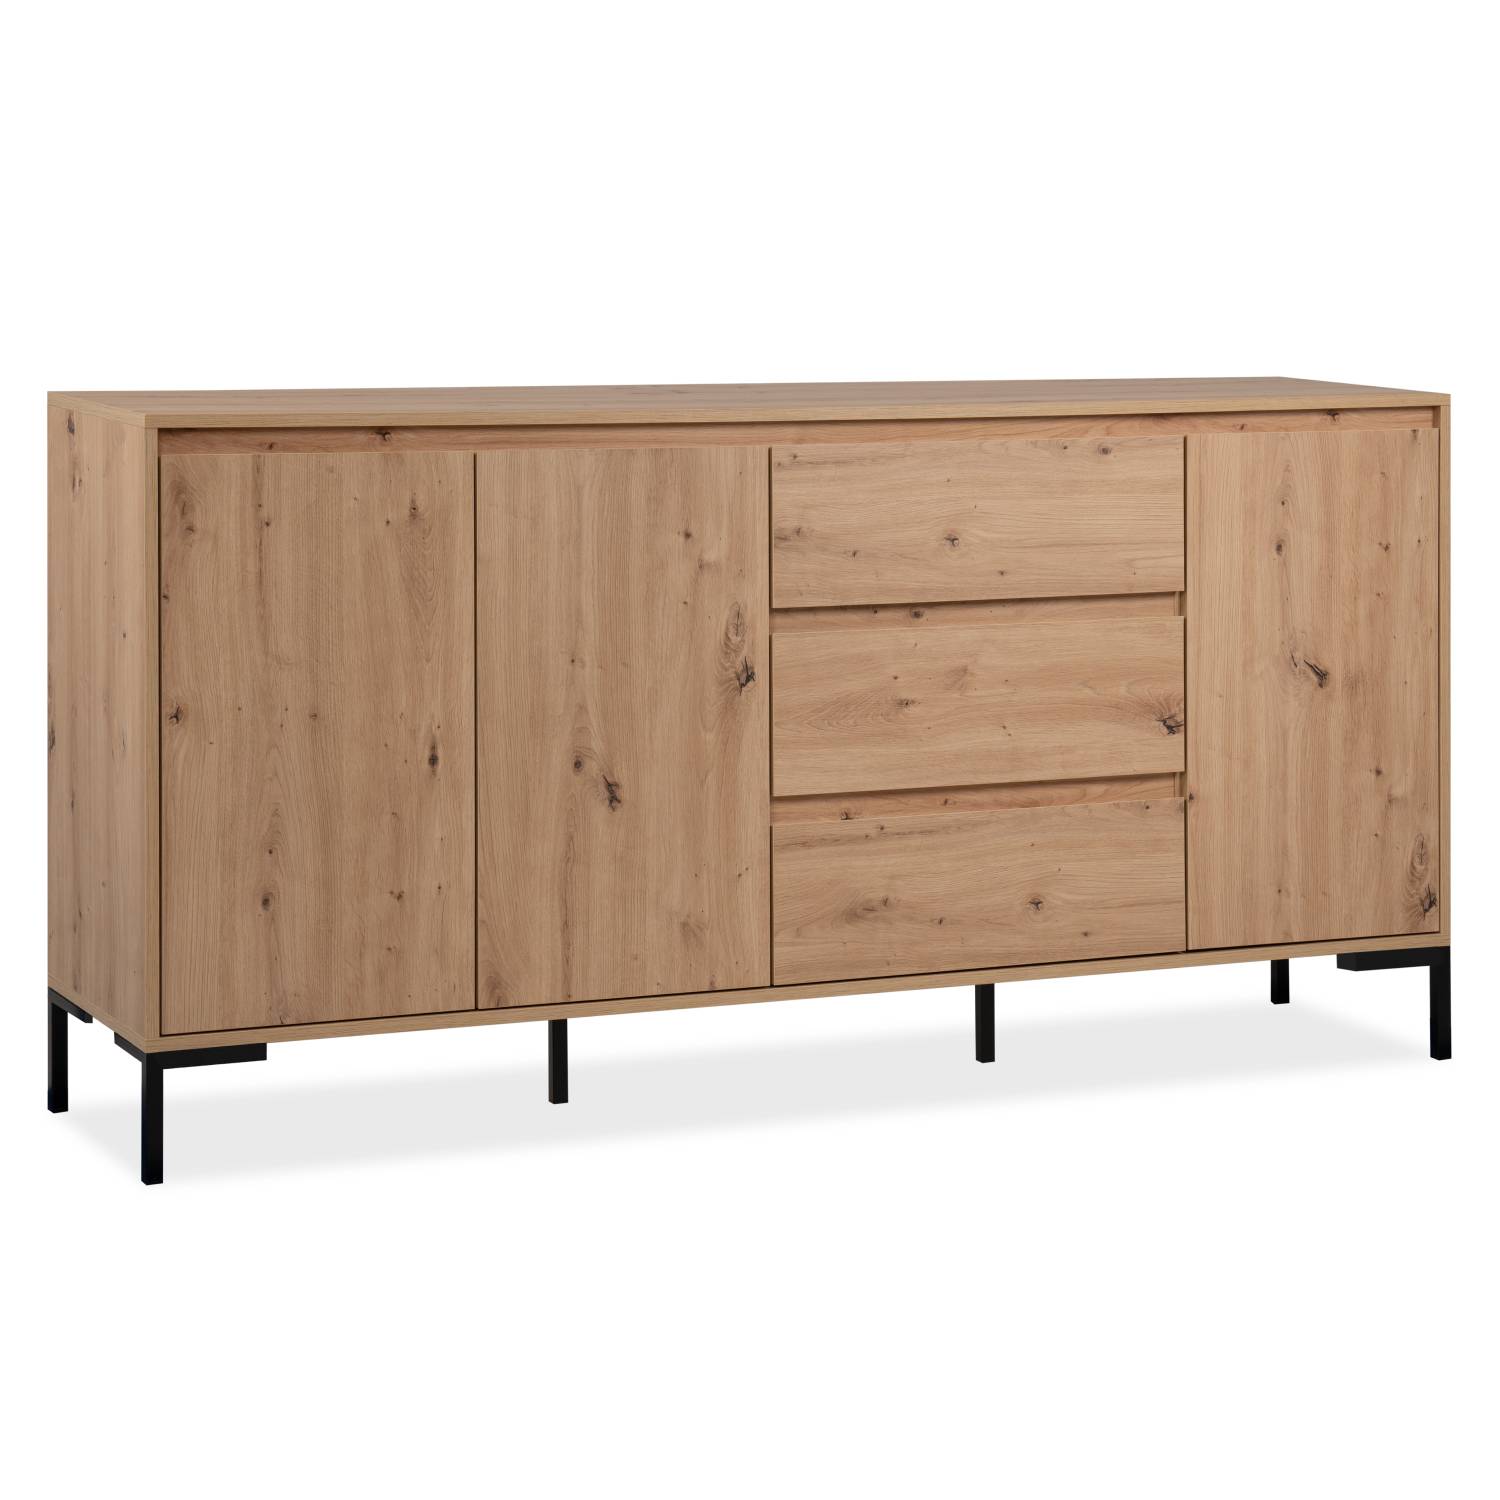 Sideboard Chest of Drawers 170 cm Wood Oak Cupboard Living Room Cabinet Industrial Look